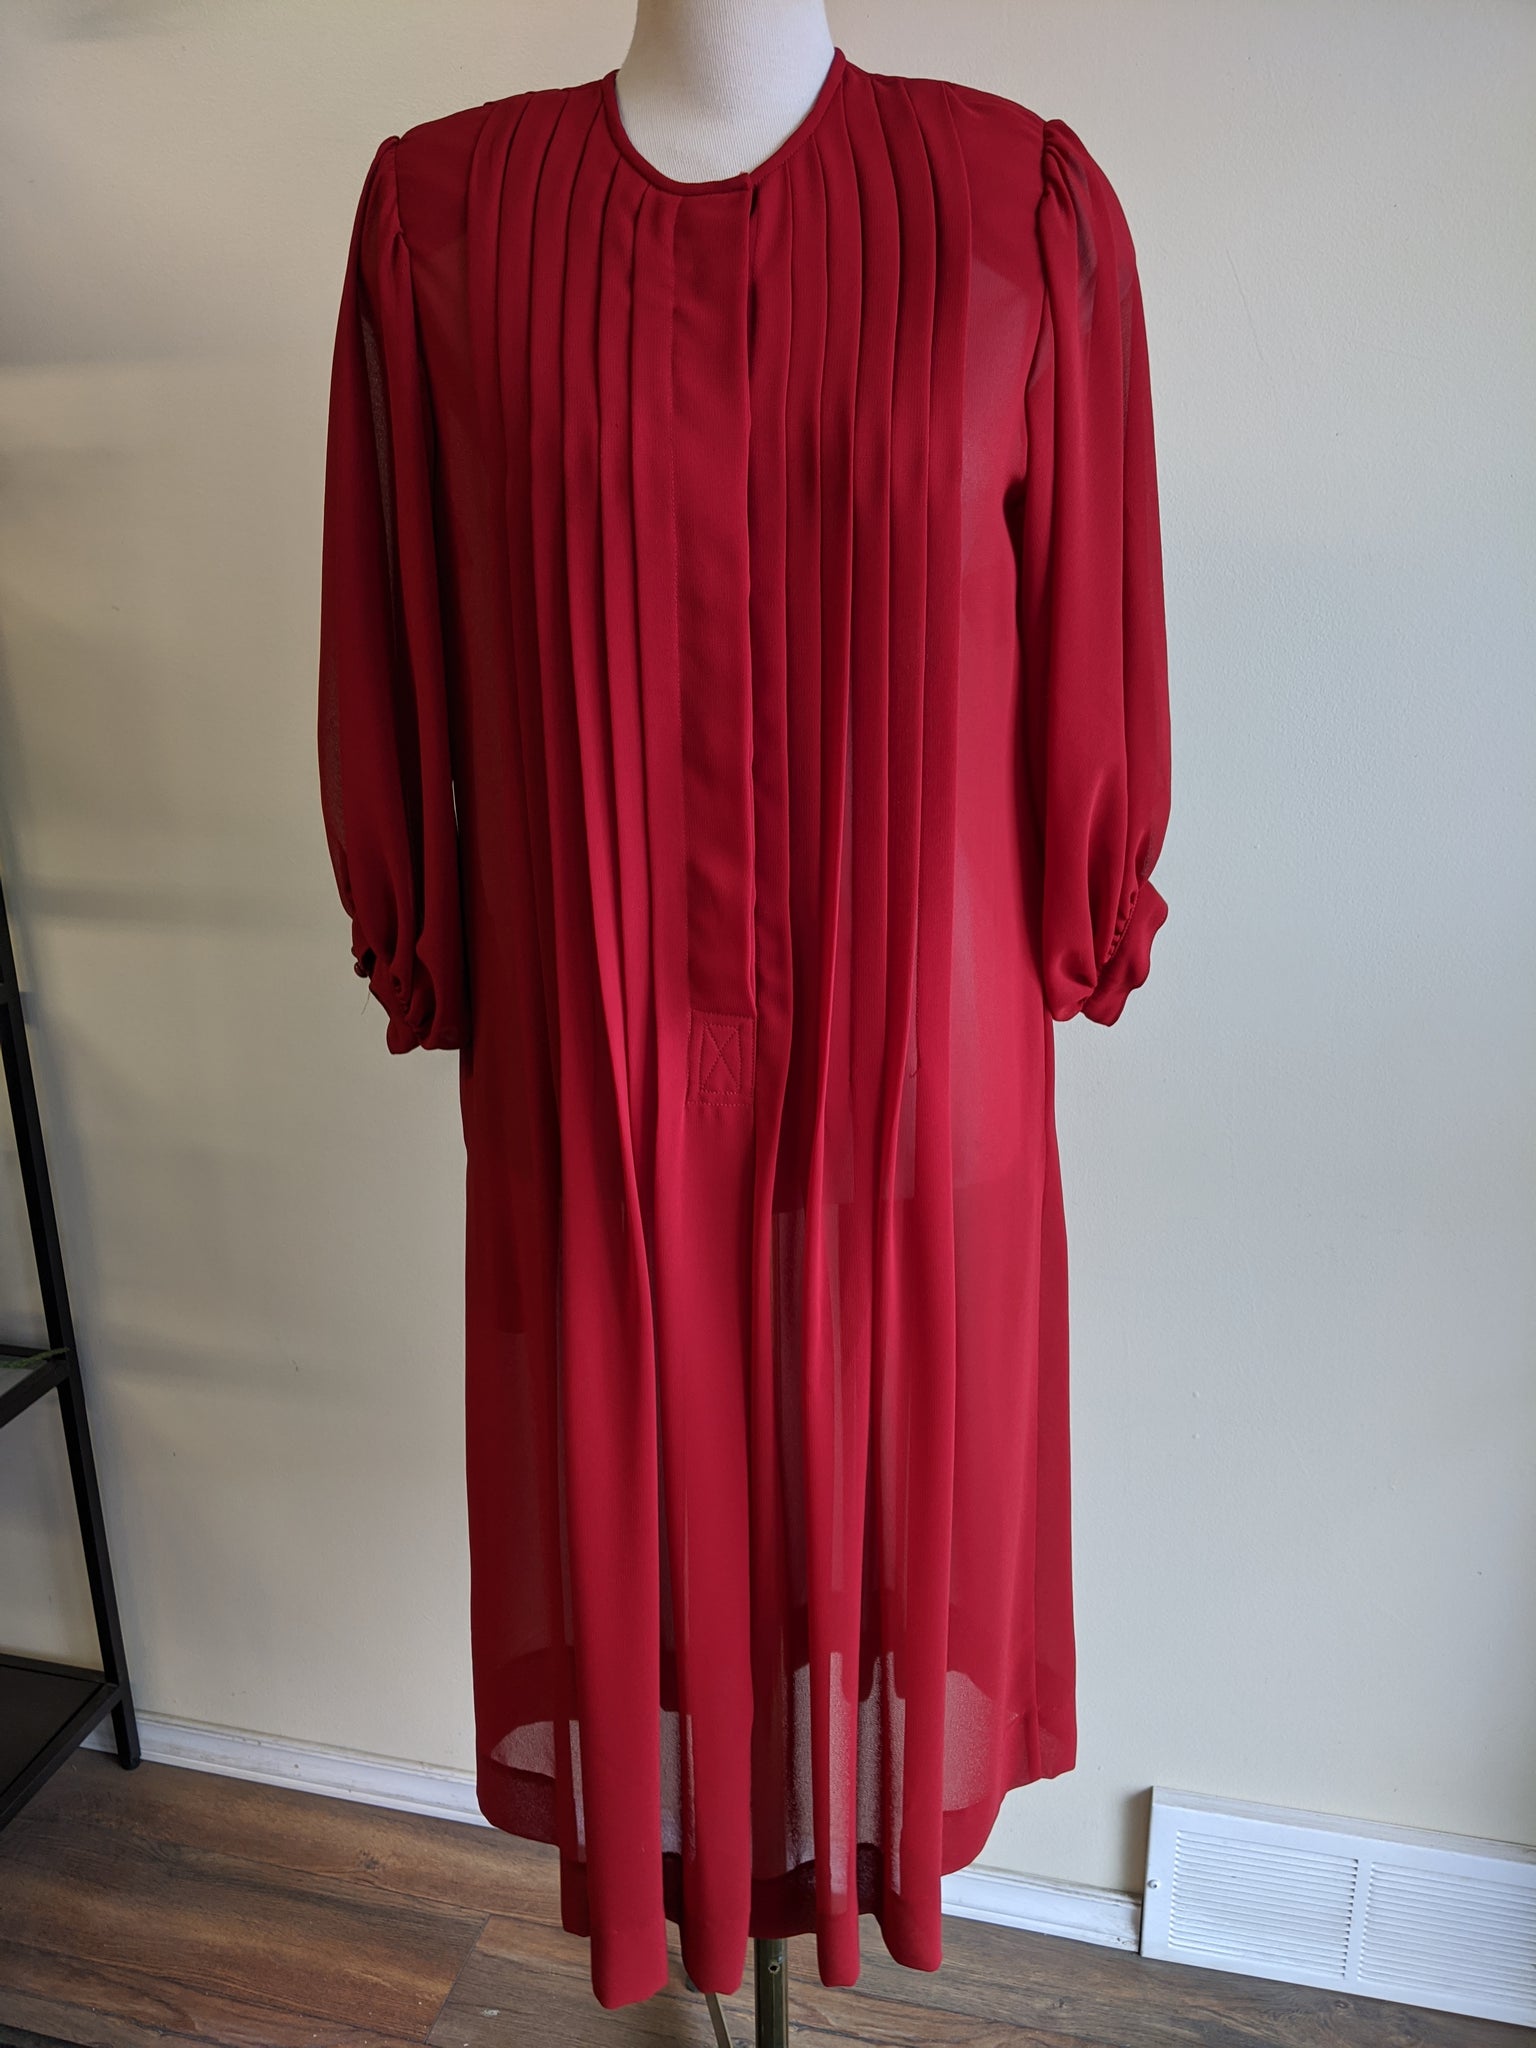 Sheer Red 80’s Dress